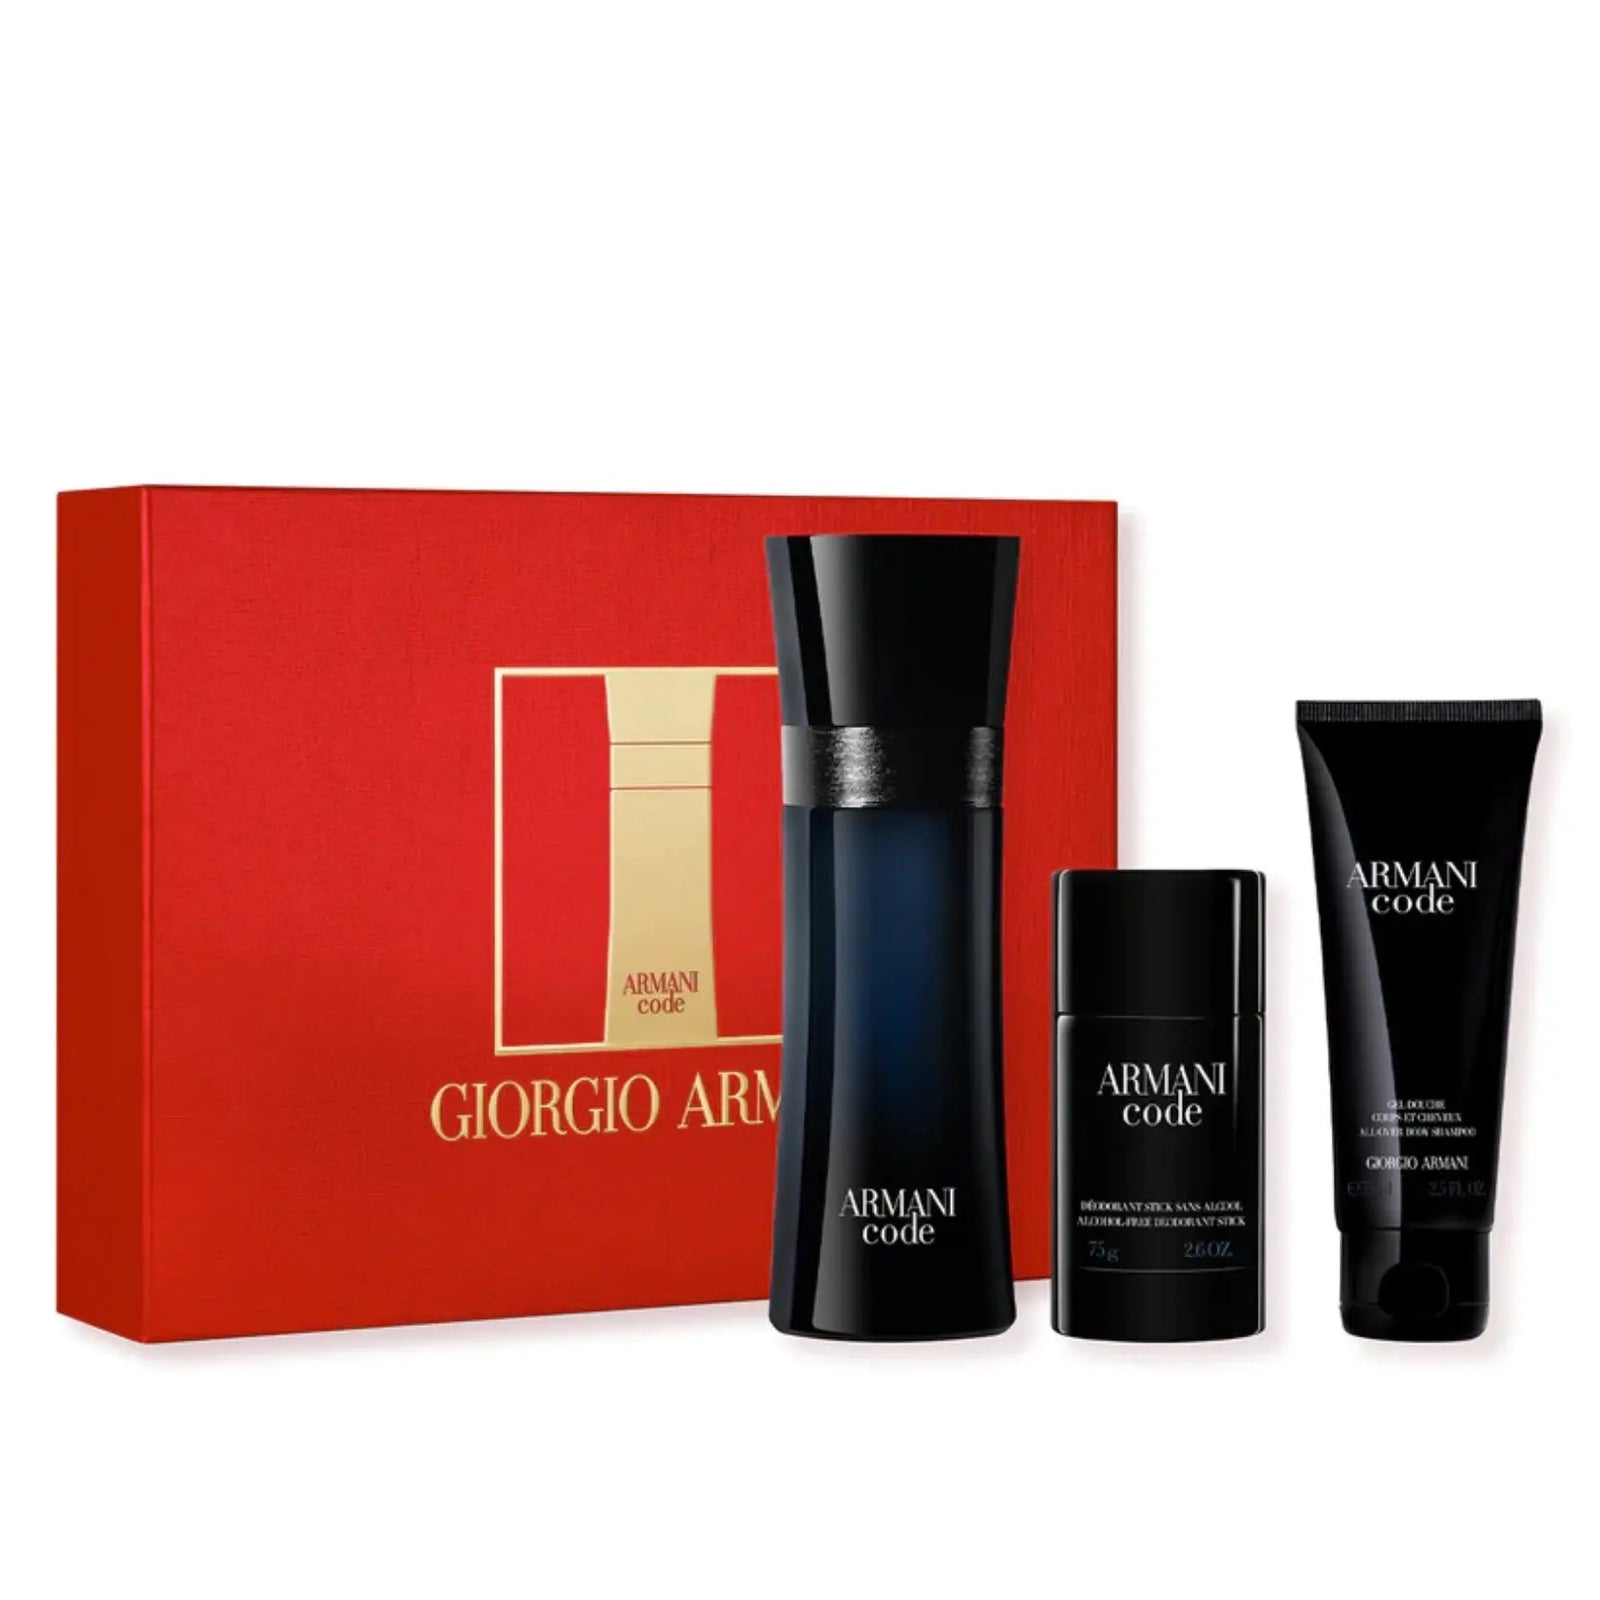 Giorgio Armani Code Eau de Toilette Men's Gift 3 in 1 Set Imported Perfumes & Beauty Store